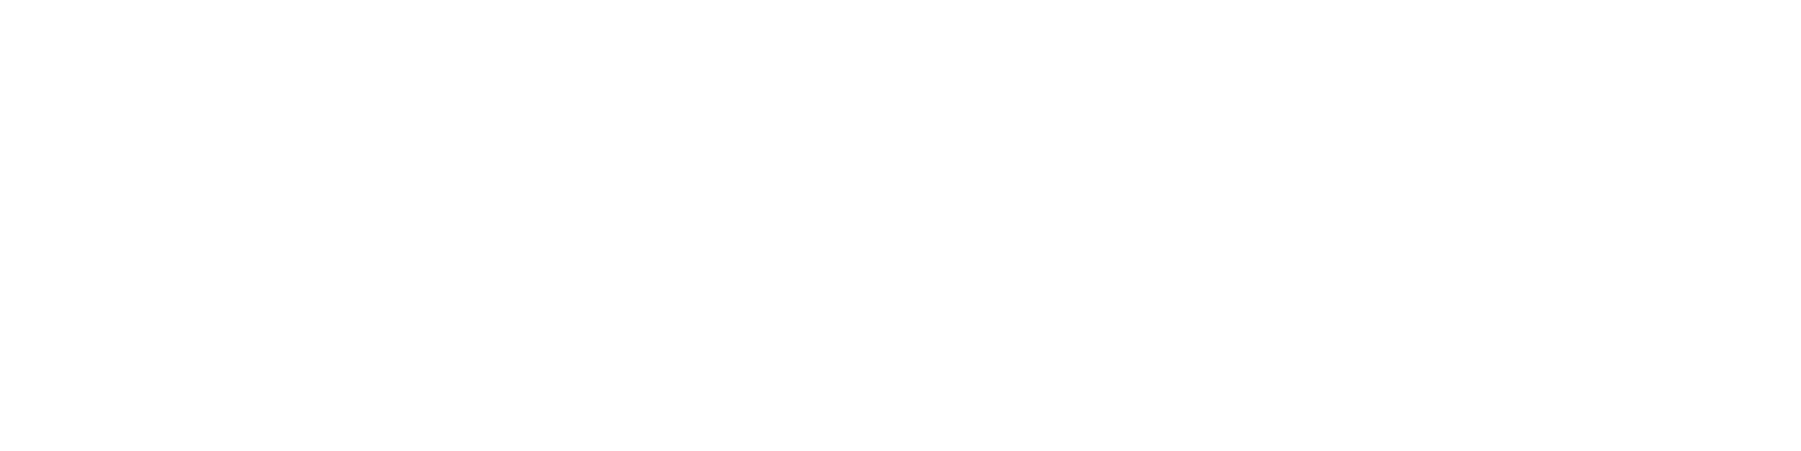 Iowa Department of Agriculture